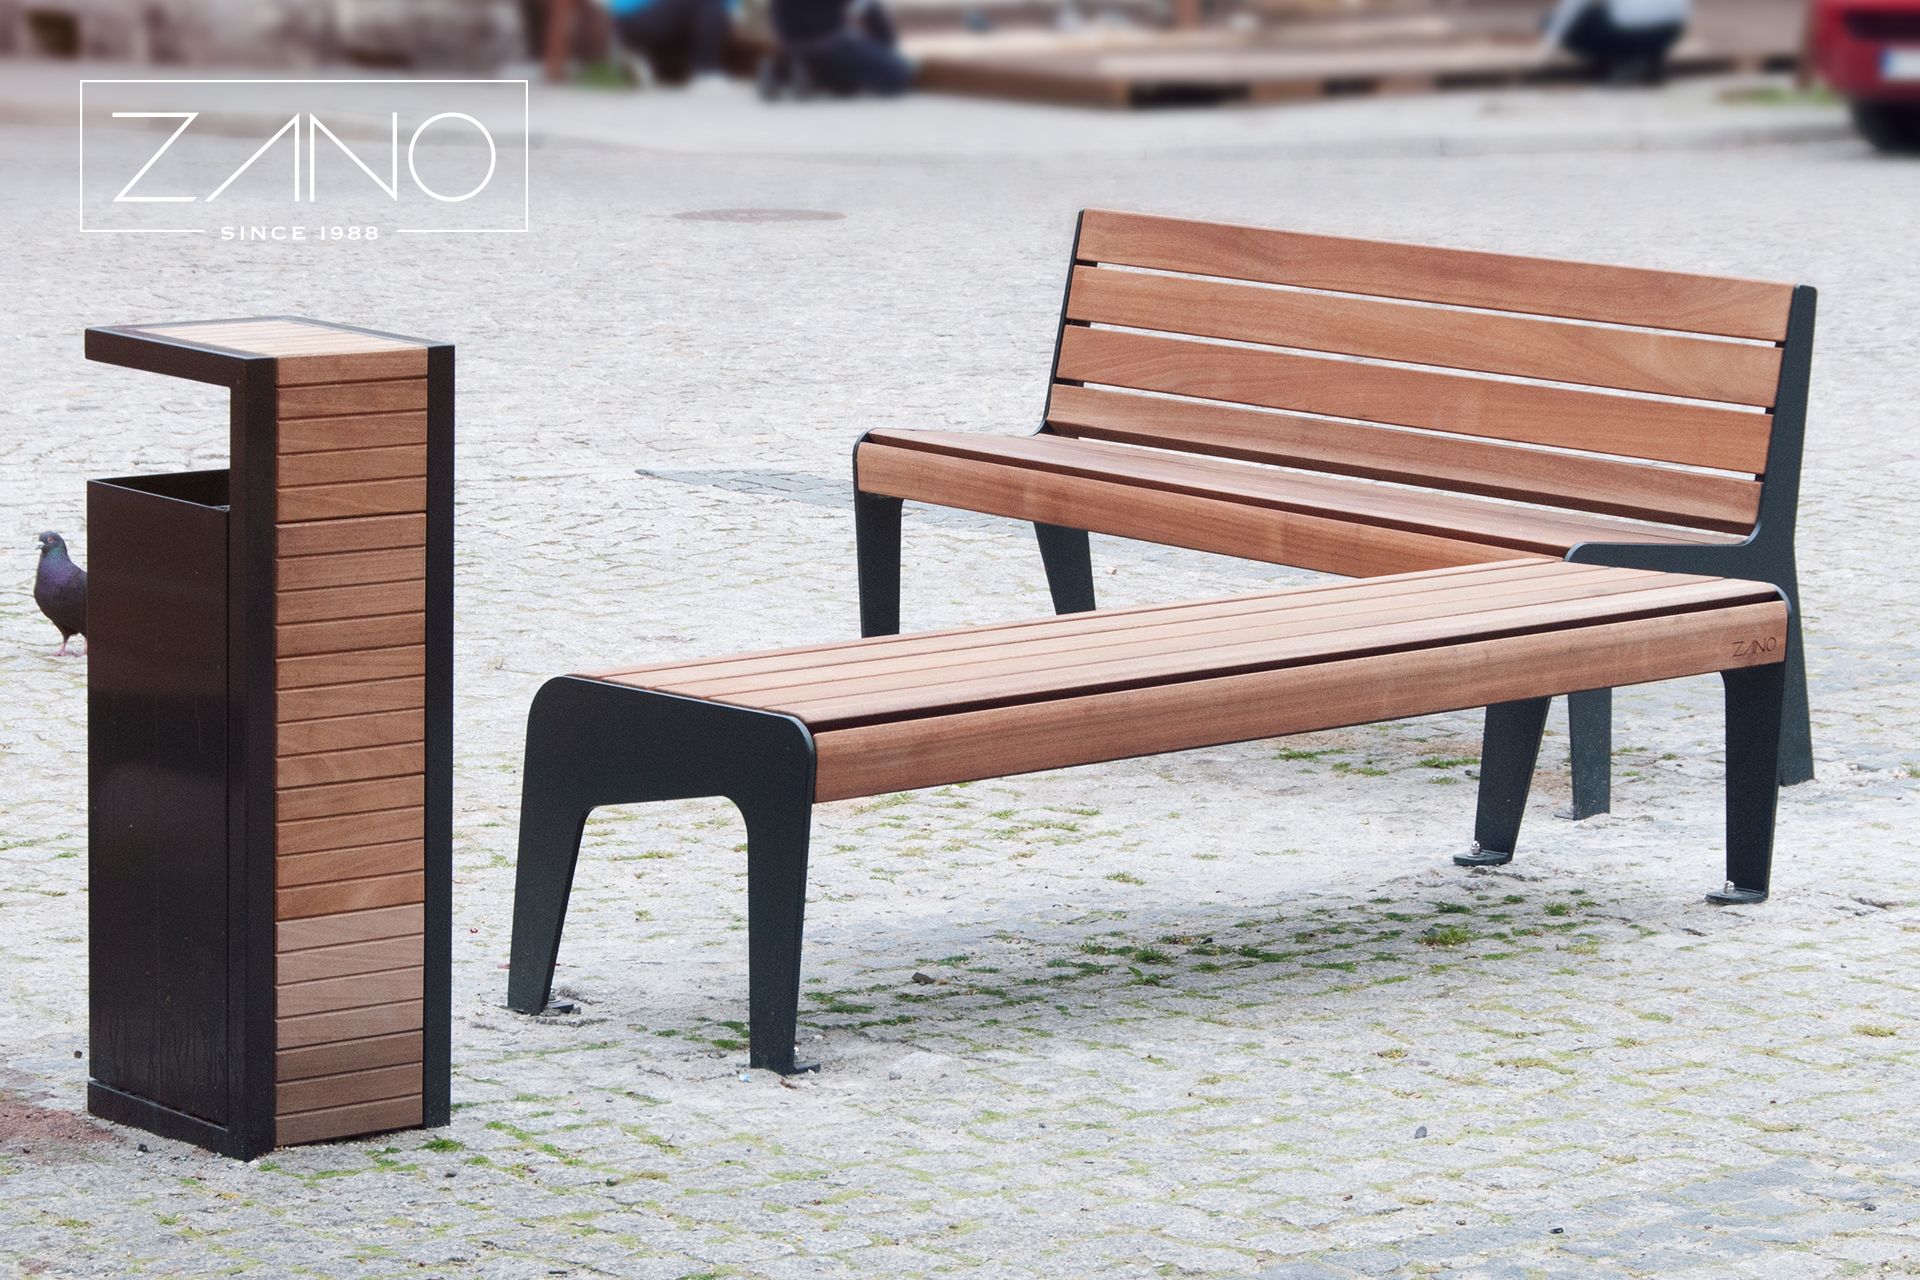 ZANO Street furniture | Benches and litter bins